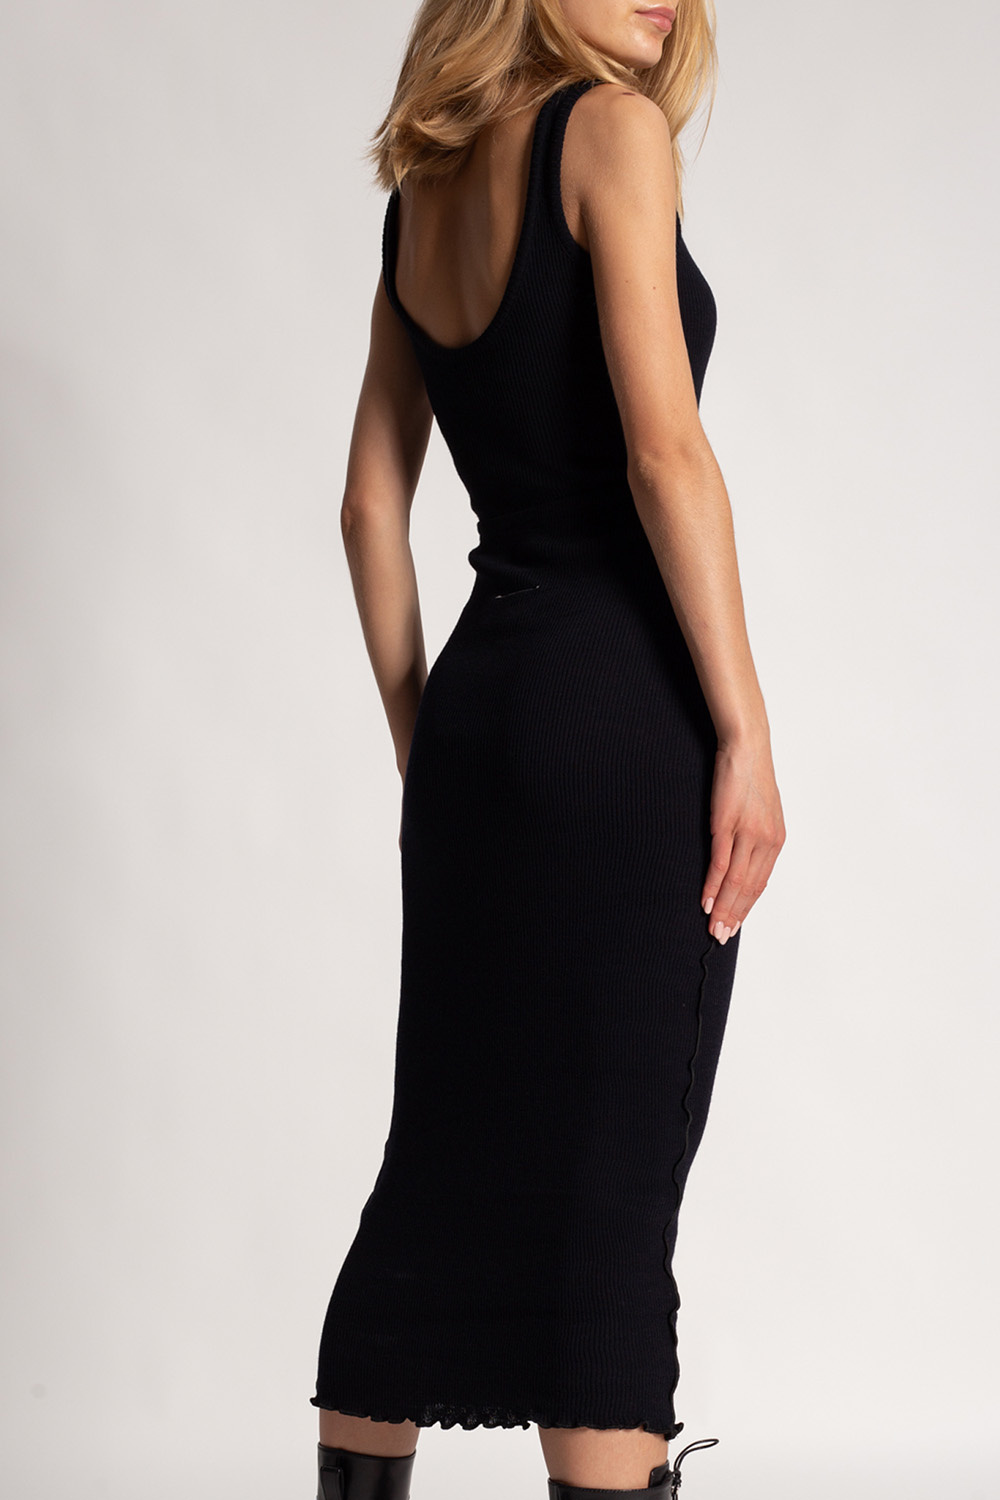 MM6 Maison Margiela Womens Black Studded Dress